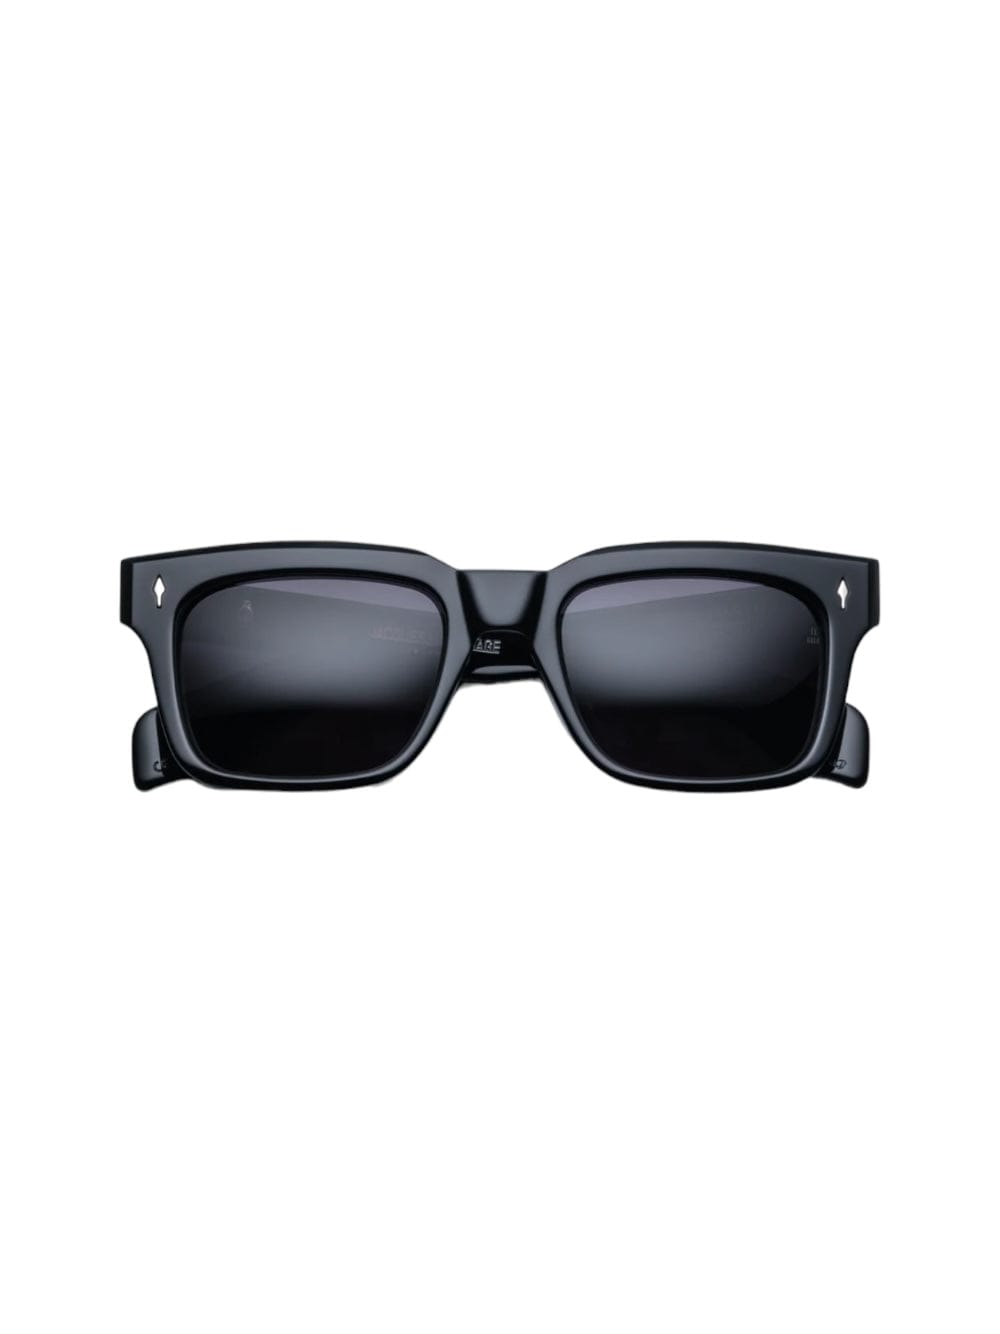 Jacques Marie Mage Torino - Black Sunglasses